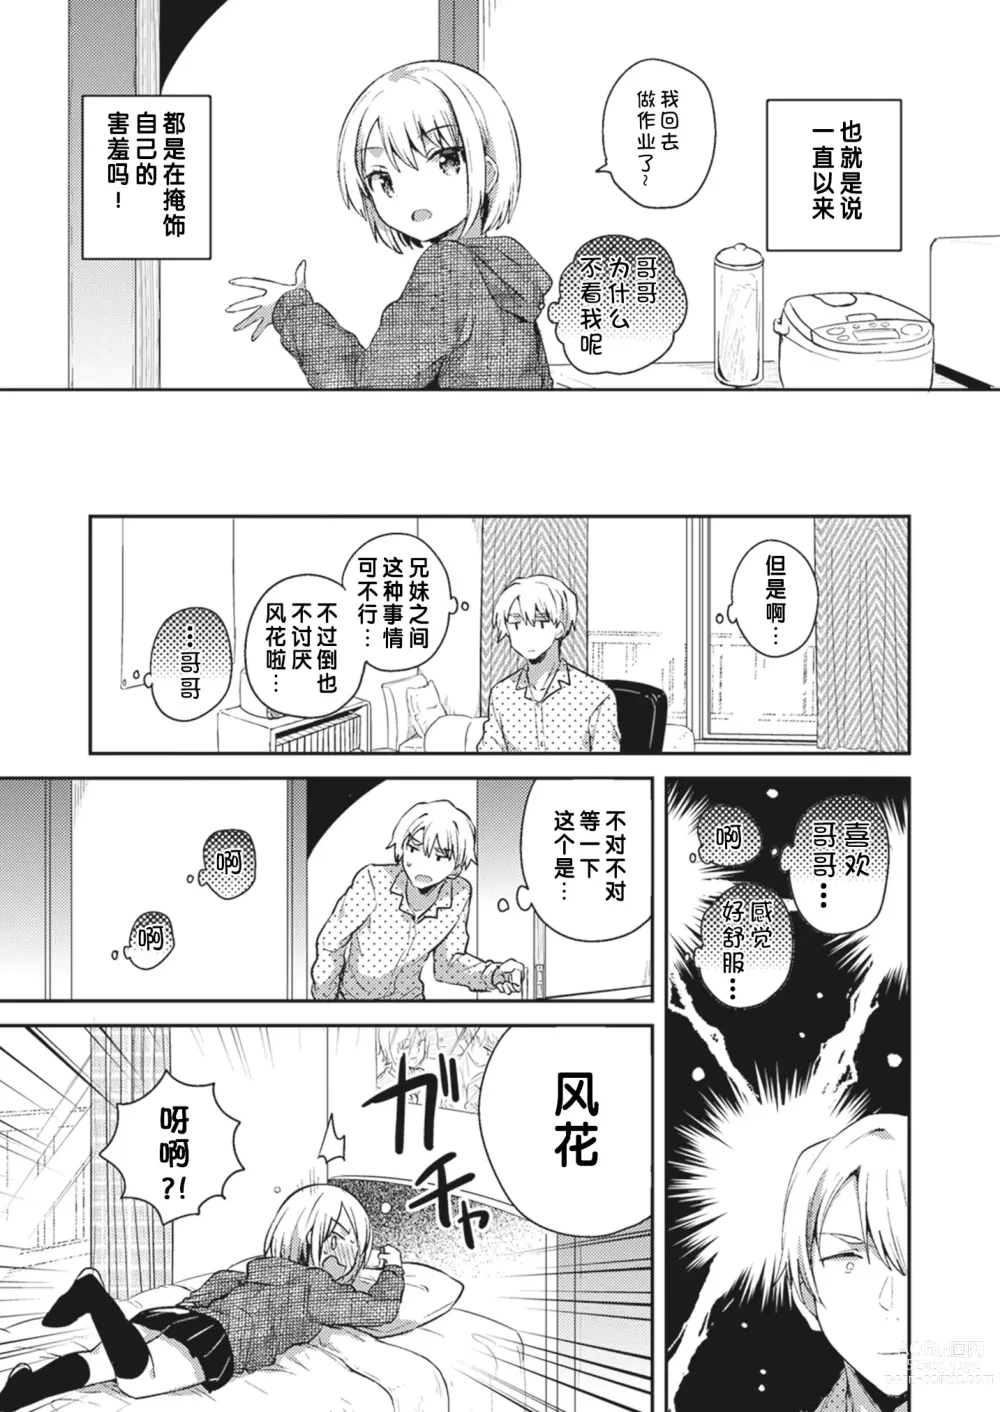 Page 3 of doujinshi 能听见妹妹的心声